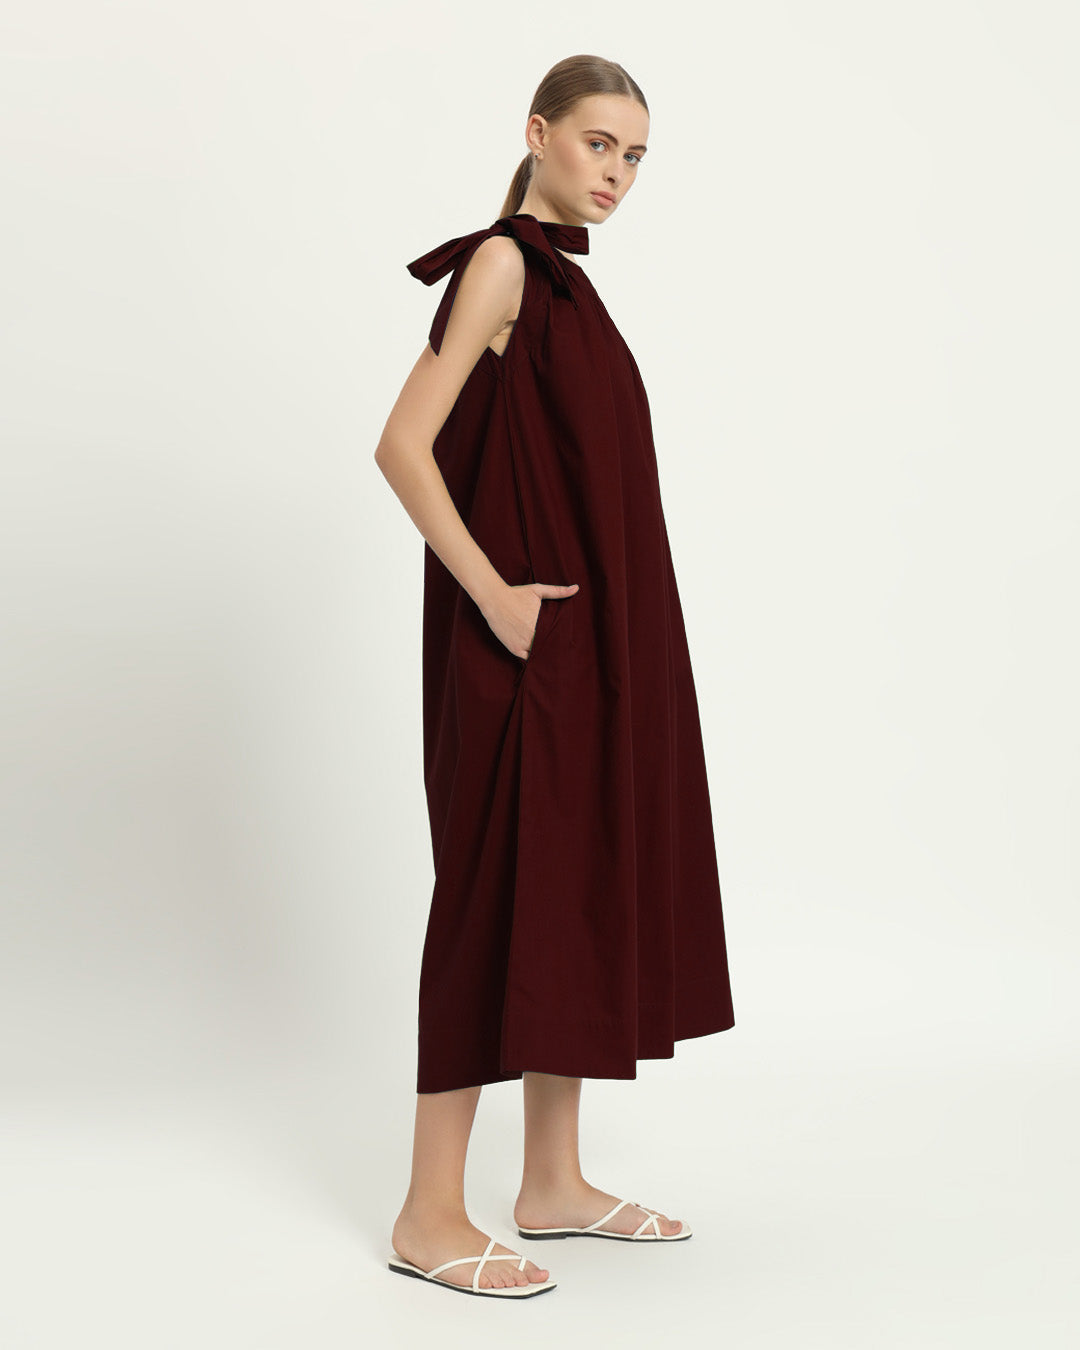 The Strehla Rouge Cotton Dress